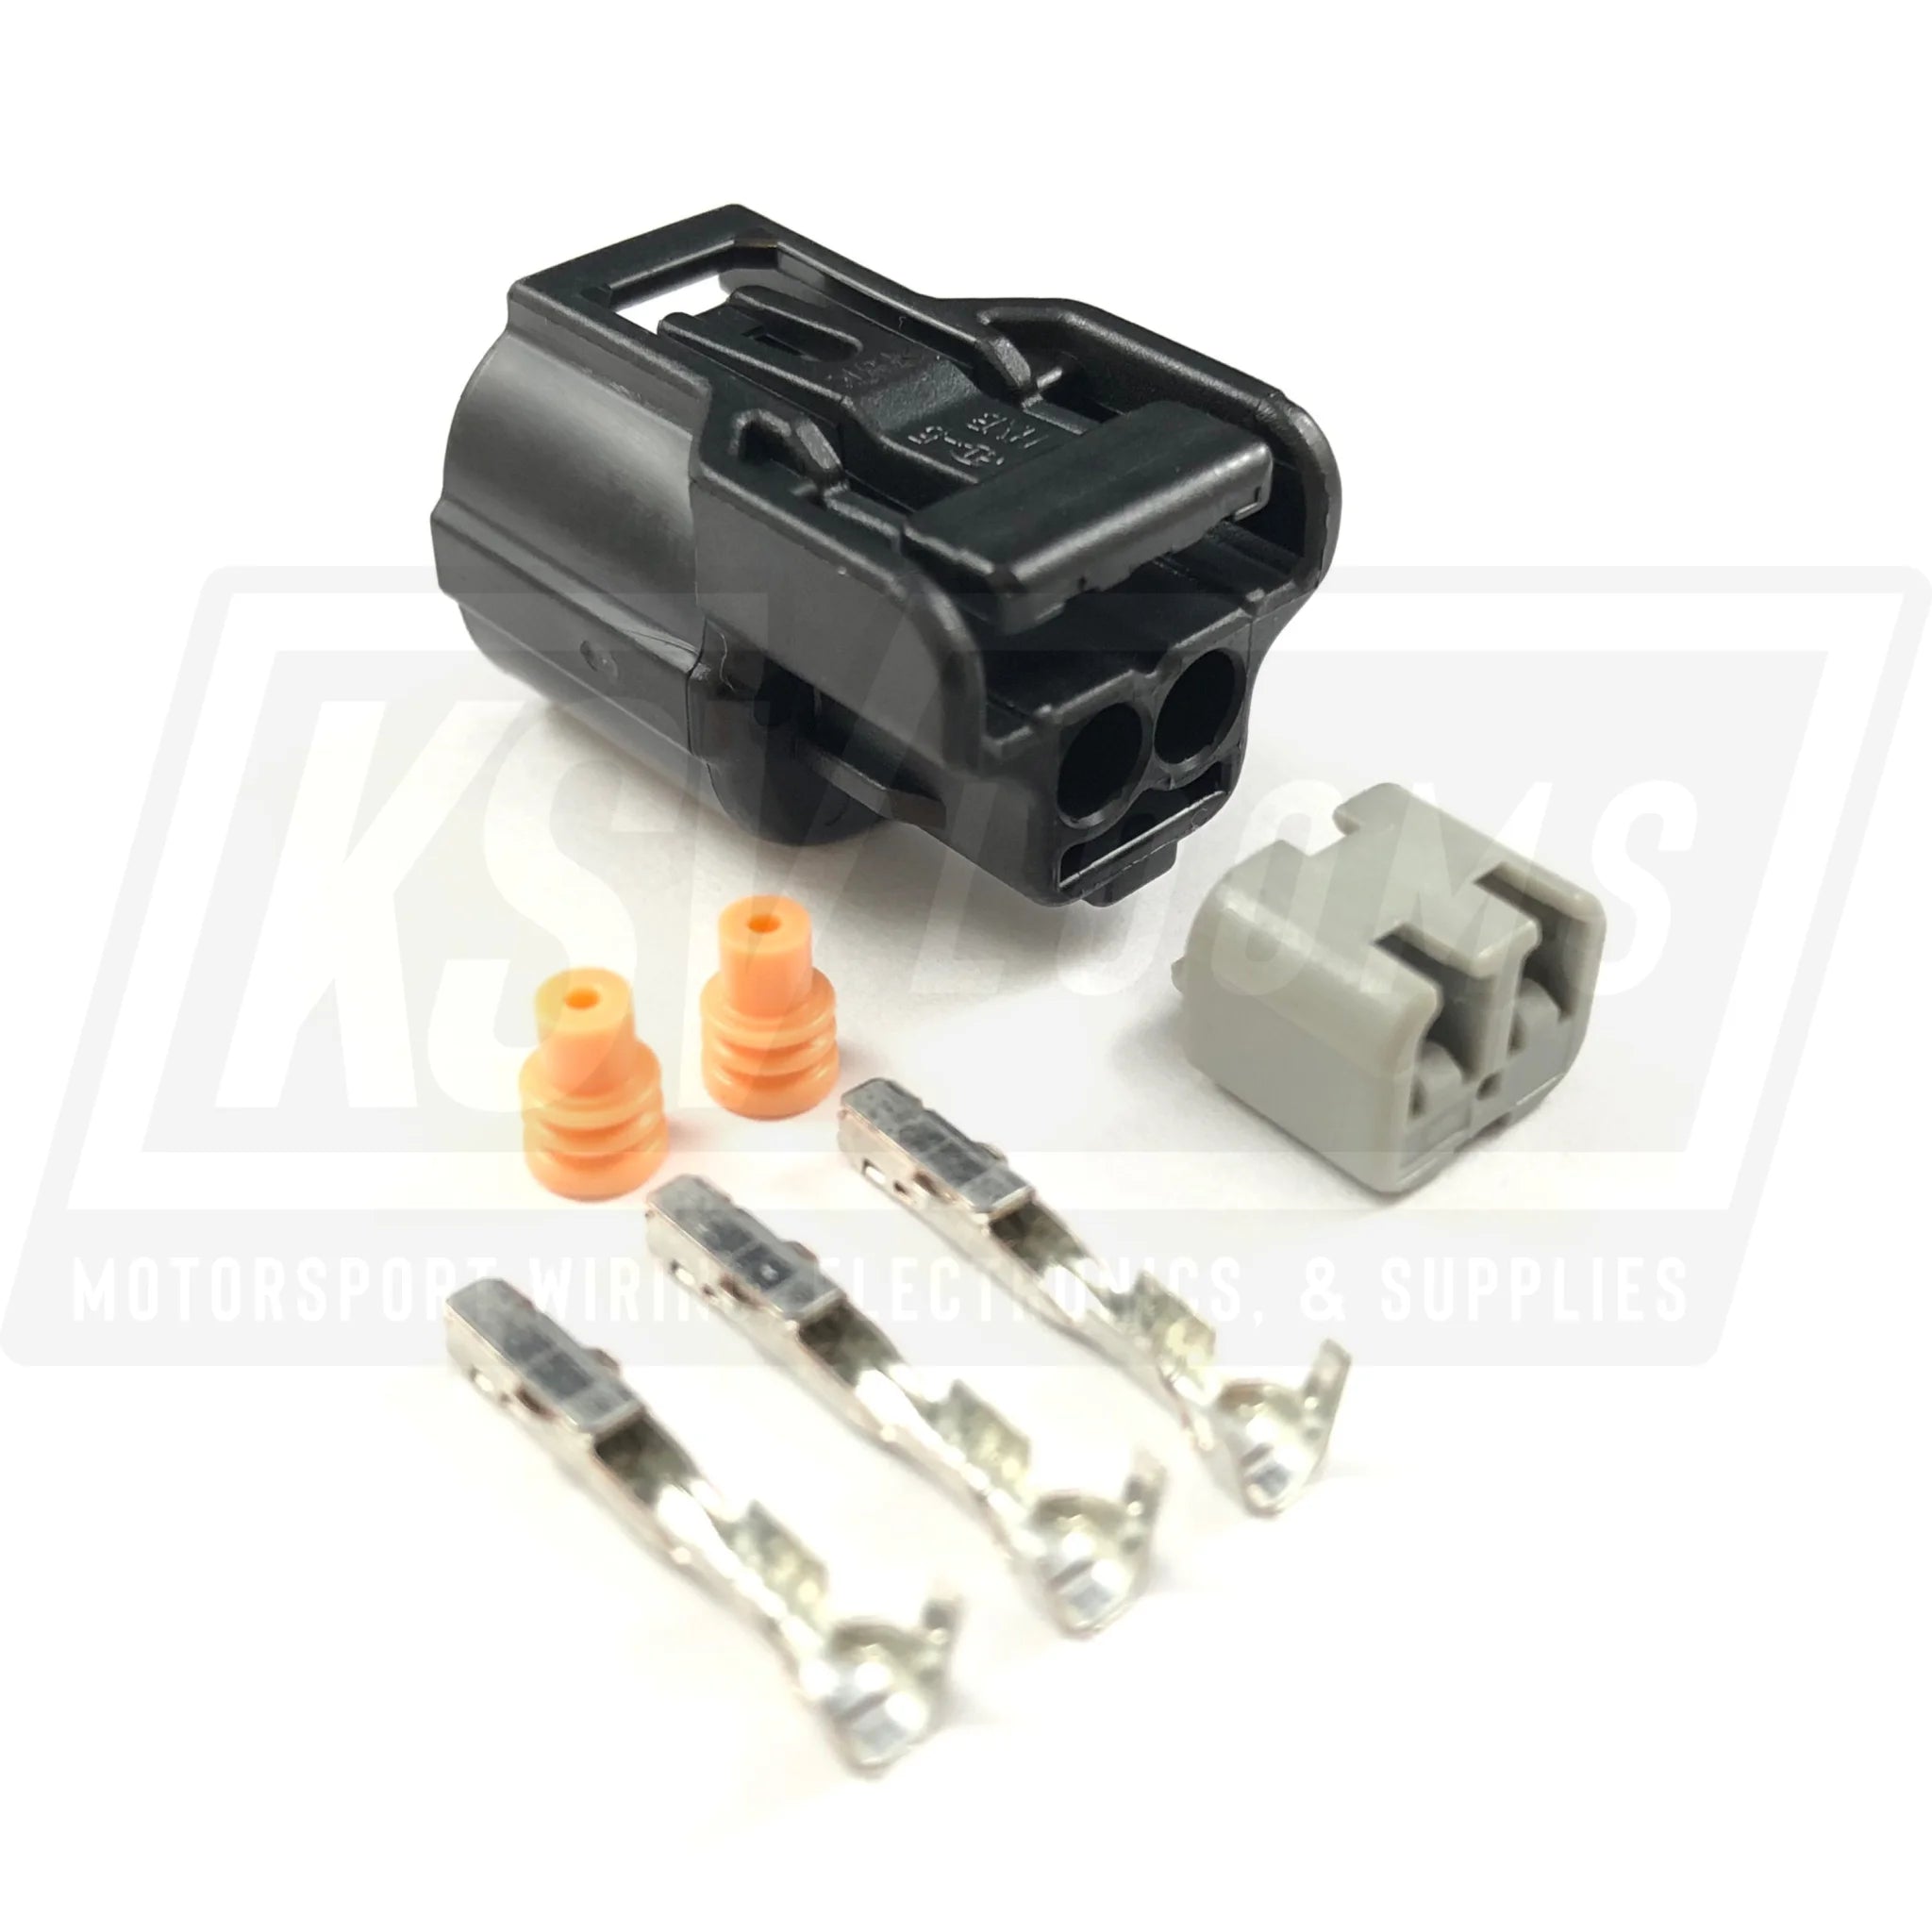 2-Way Connector Kit For Honda K-Series K20 K24 Water Coolant Temperature Sensor (22-20 Awg)